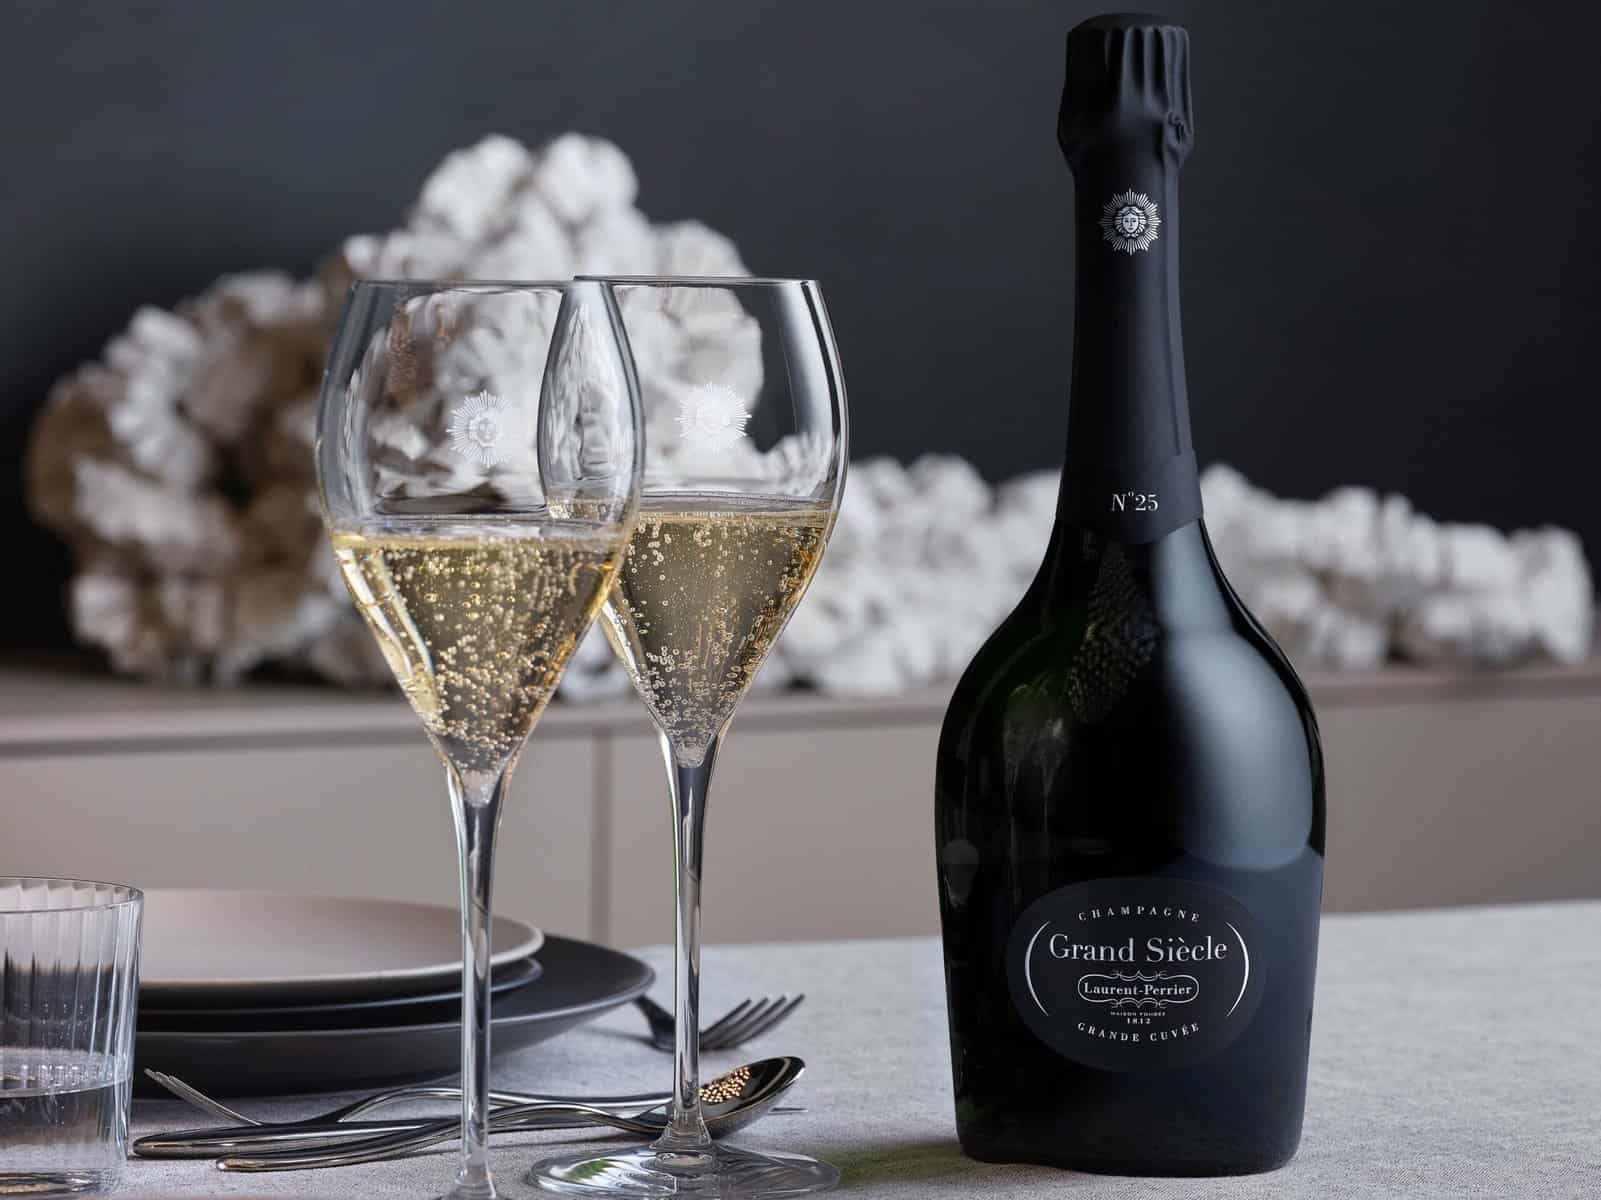 Laurent Perrier Champagne Grand Siecle Prestige Cuvee